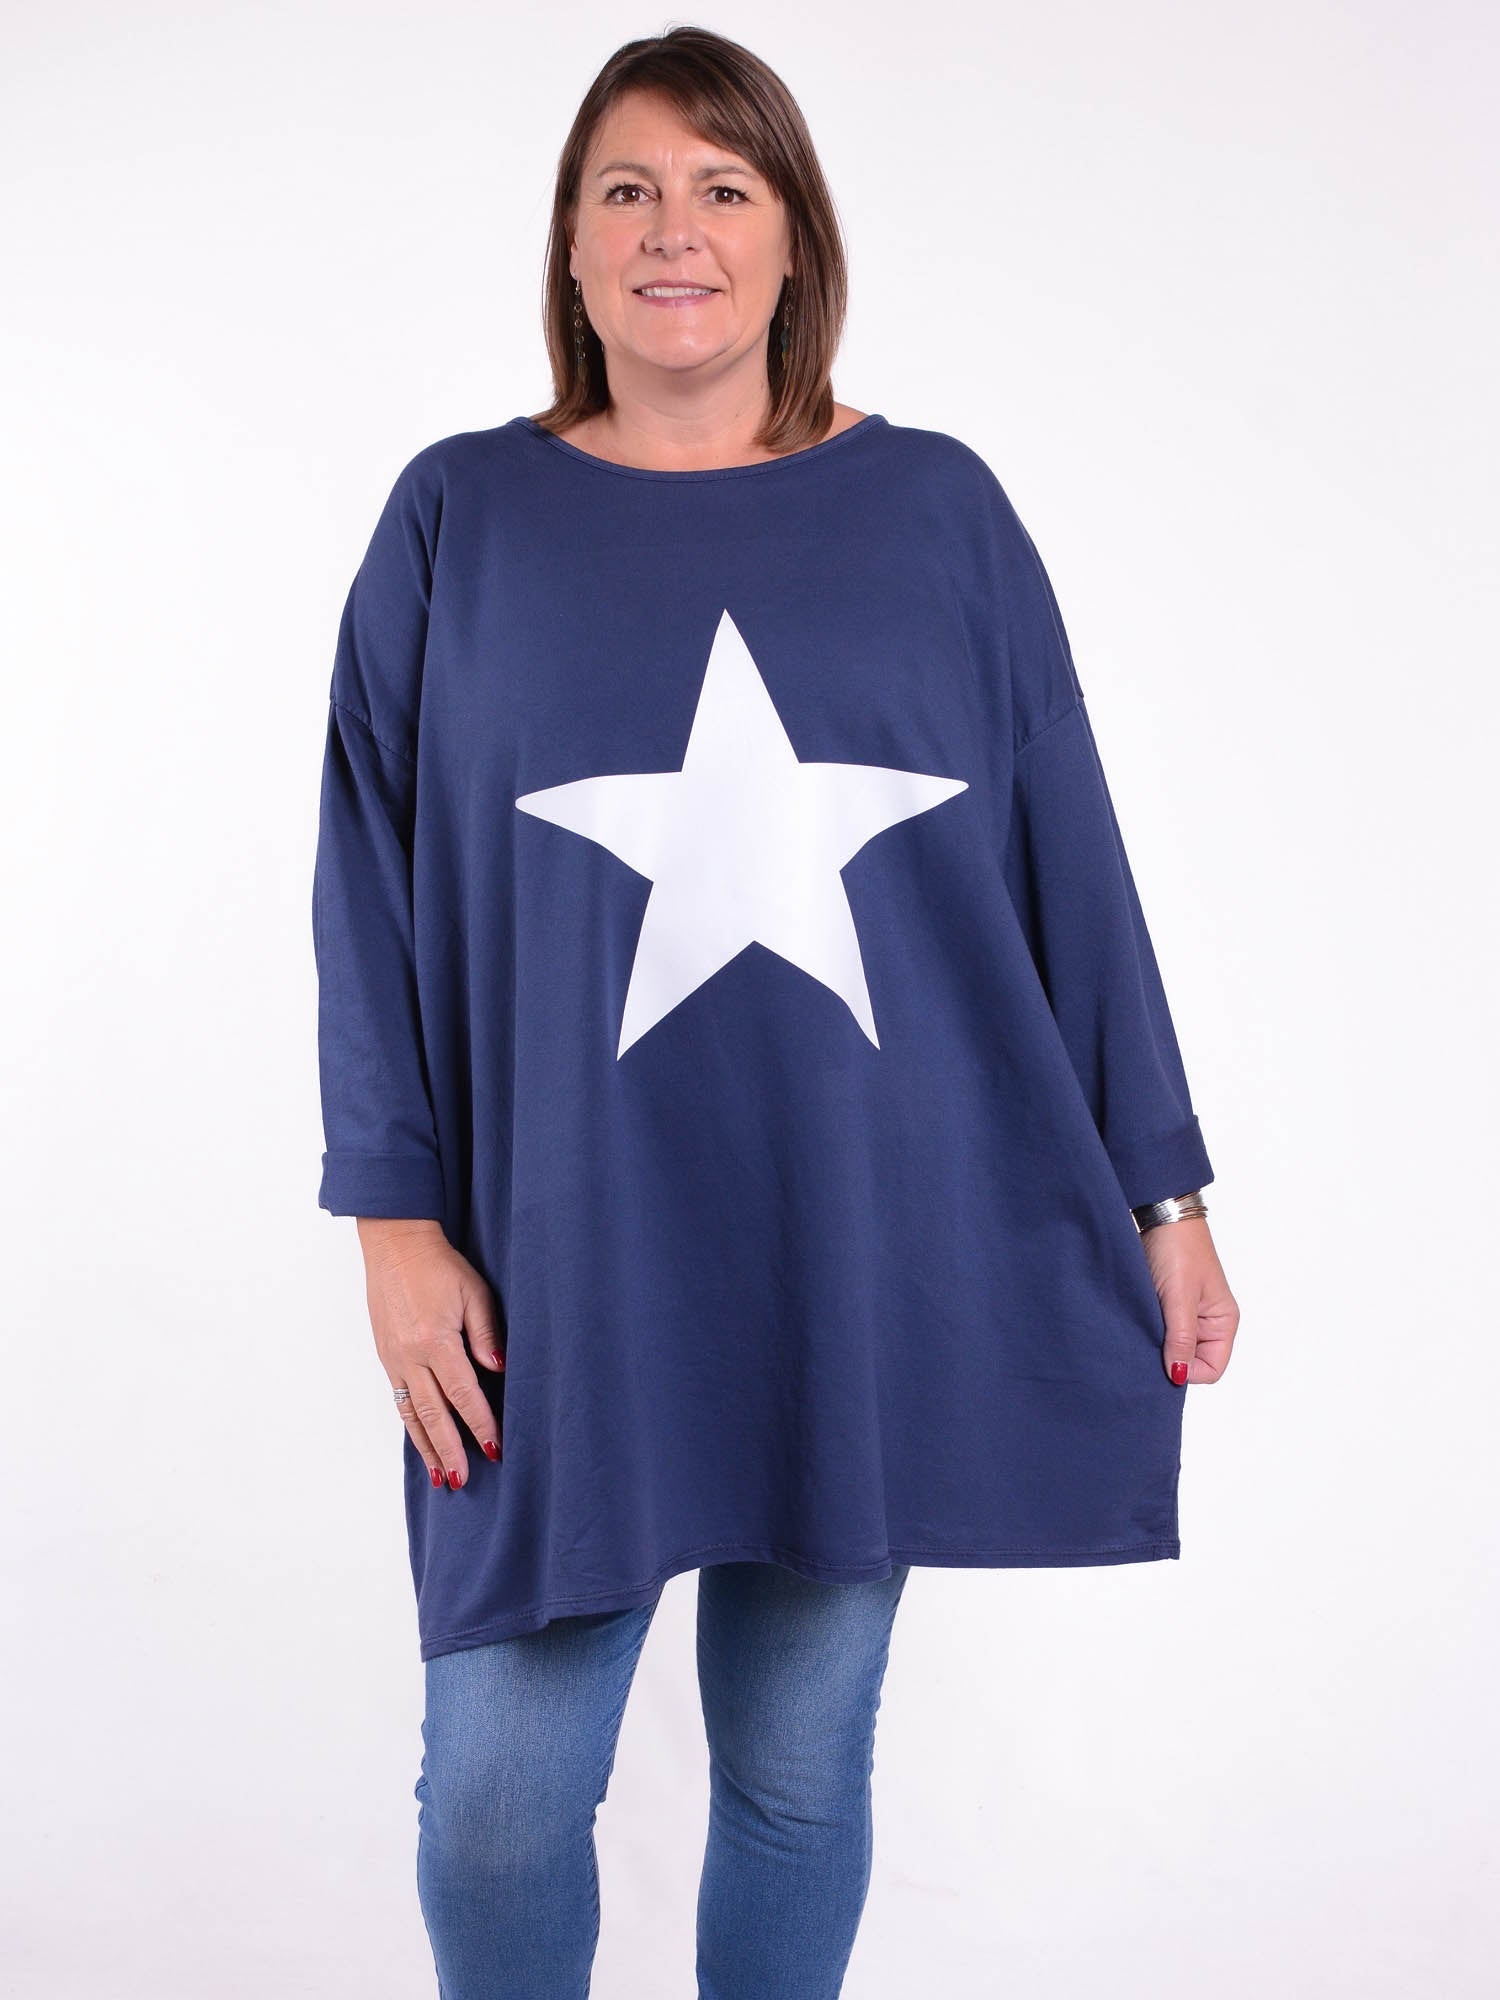 Oversized Star Sweatshirt - 9482S, Tops & Shirts, Pure Plus Clothing, Lagenlook Clothing, Plus Size Fashion, Over 50 Fashion